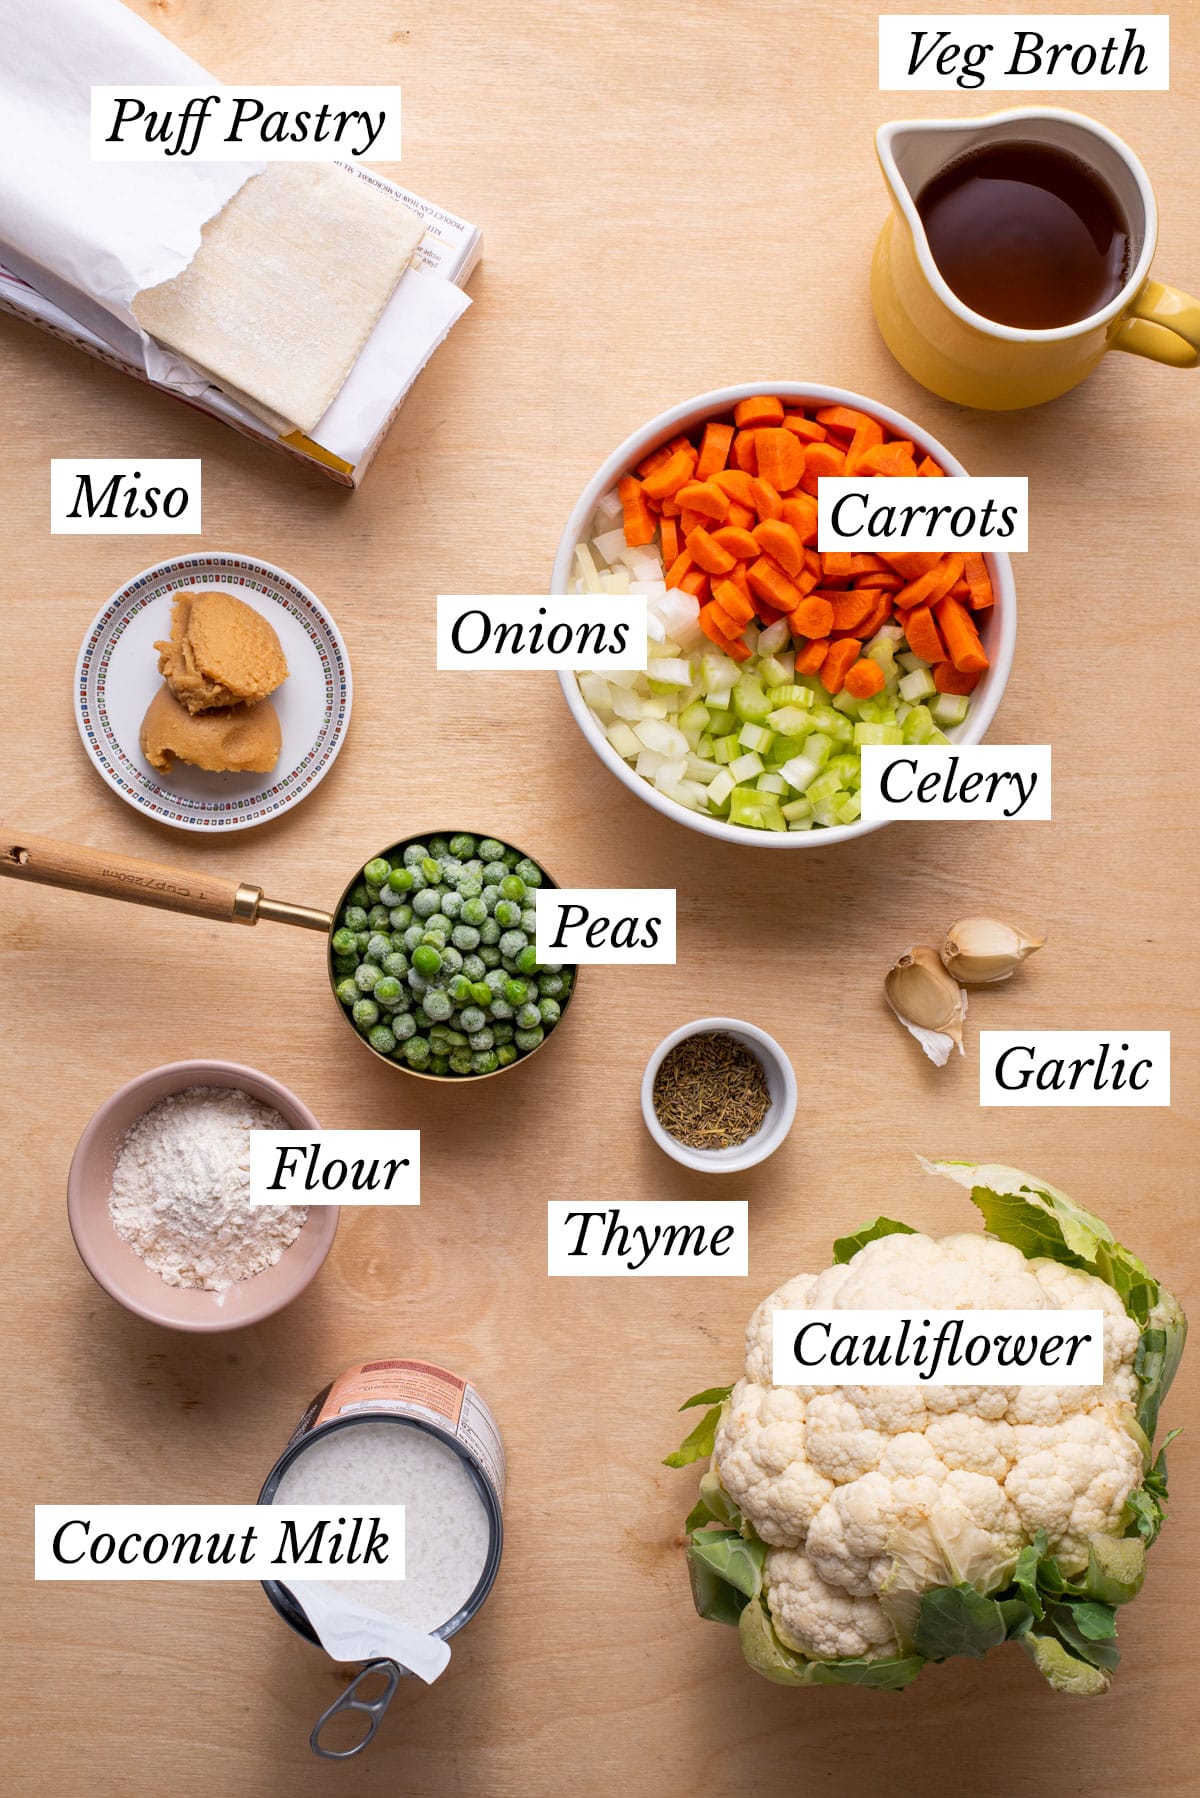 Ingredients gathered to make vegan pot pie with cauliflower.